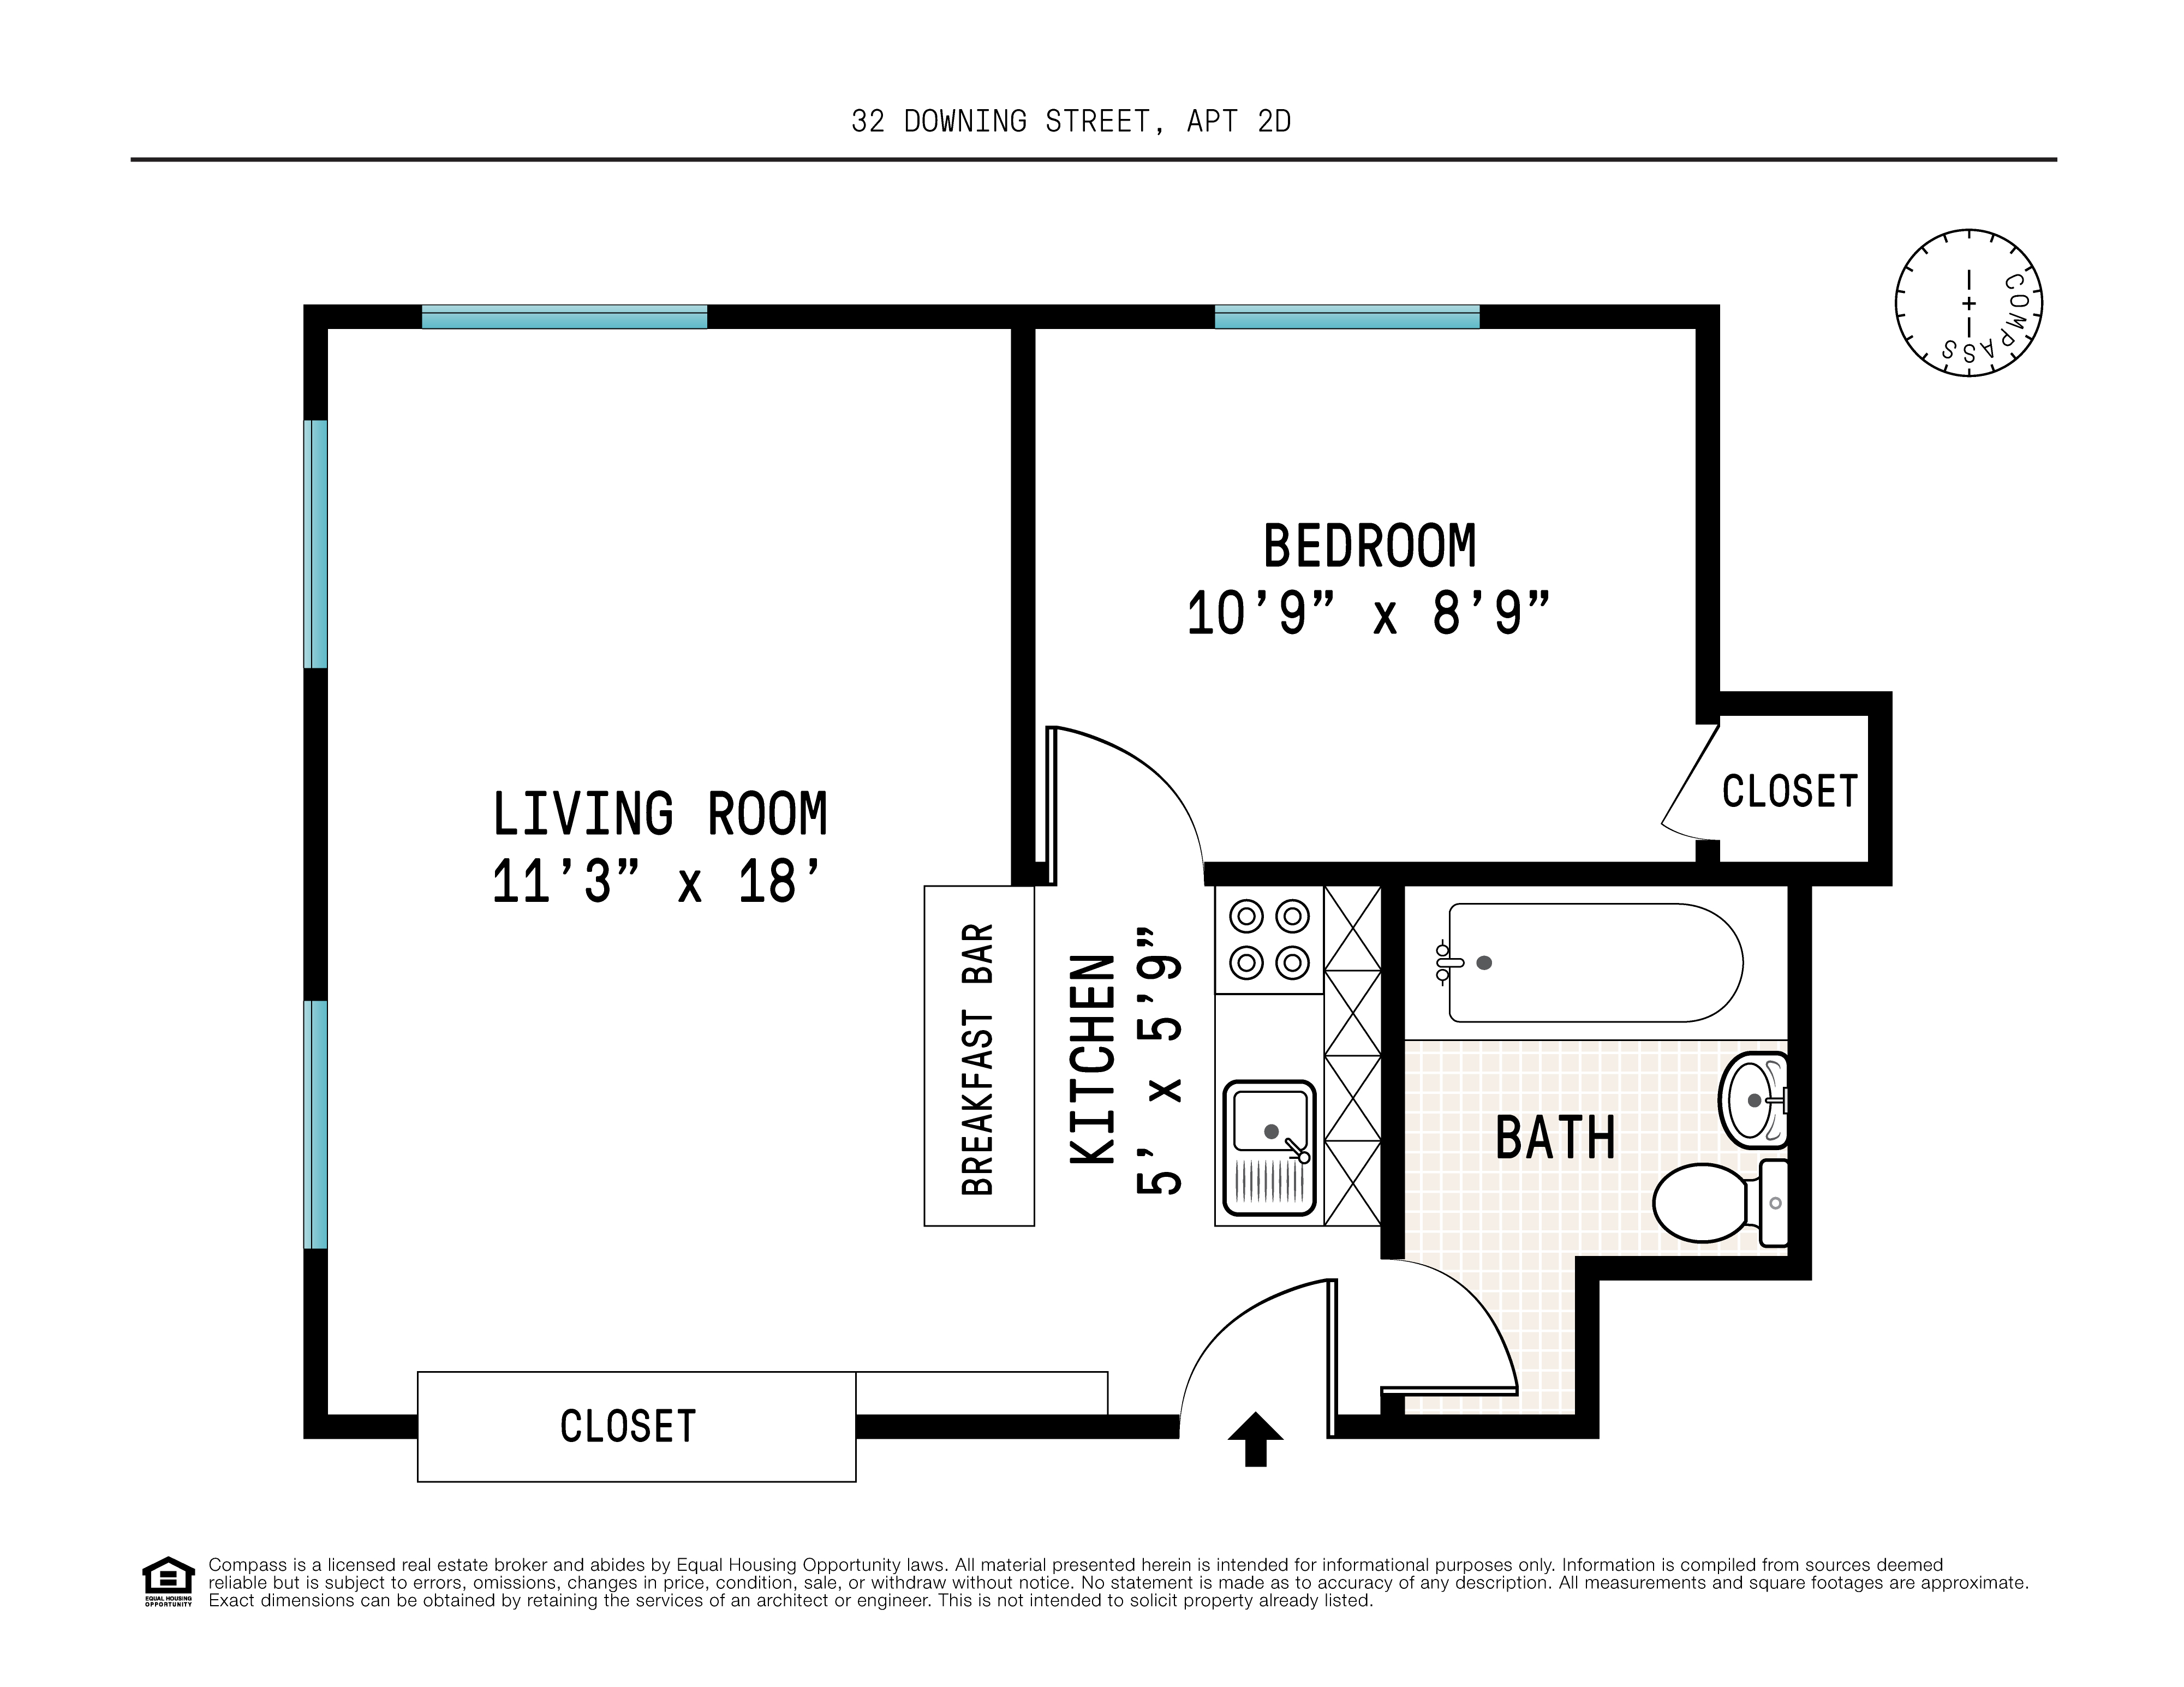 Floorplan for 32 Downing Street, 2D